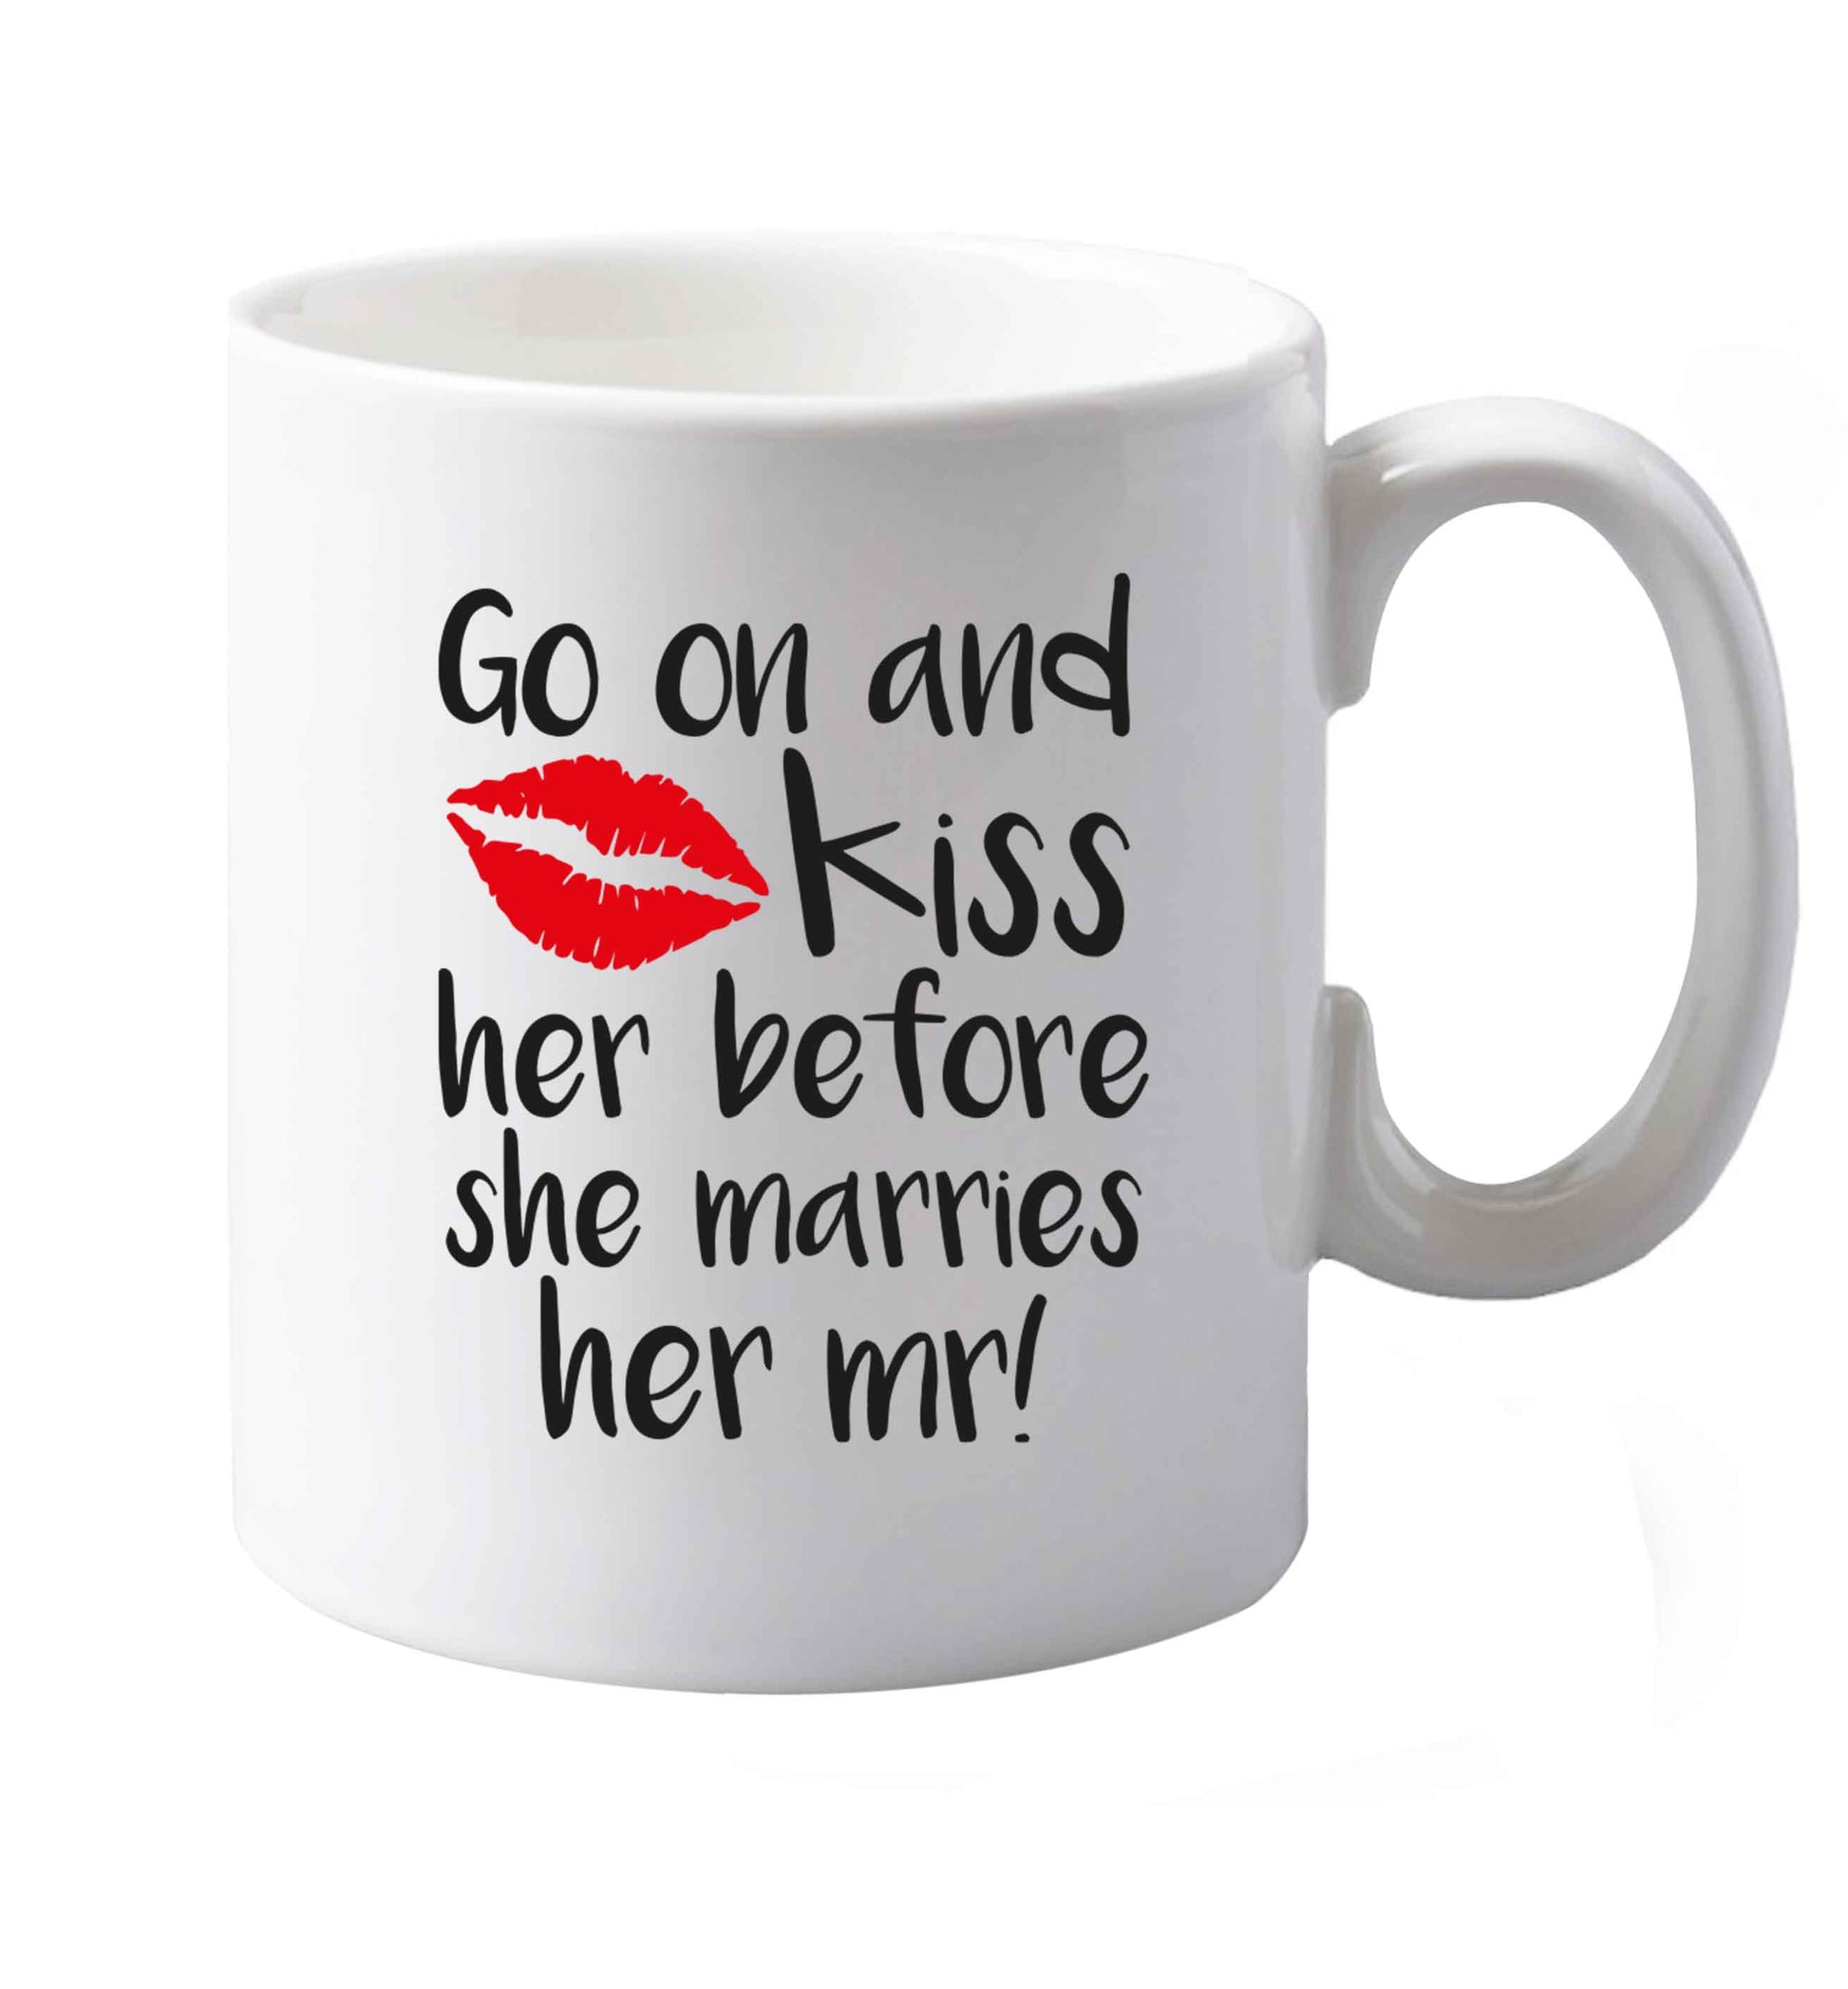 10 oz Kiss her before she marries her mr!   ceramic mug both sides